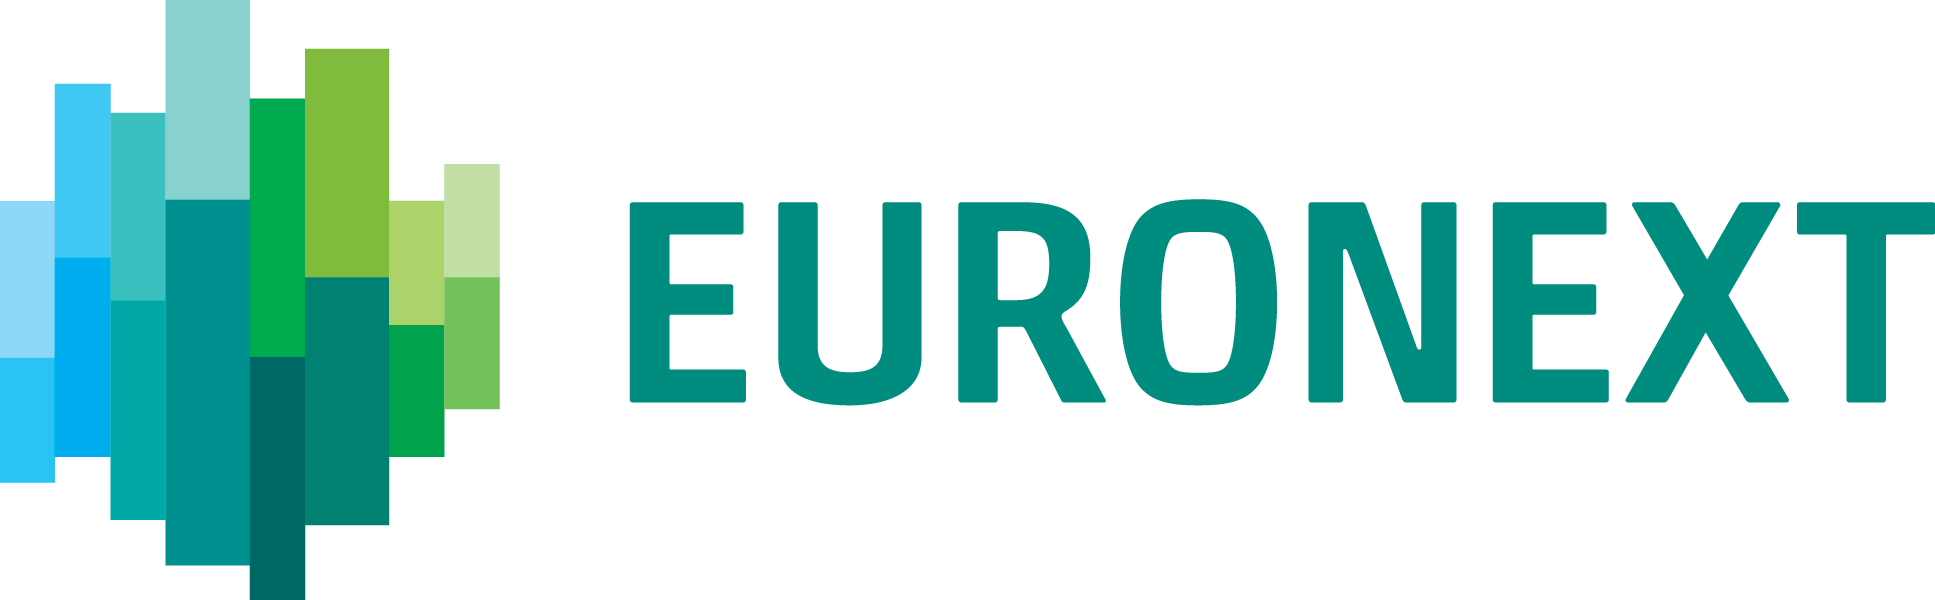 Euronext Brand Logo